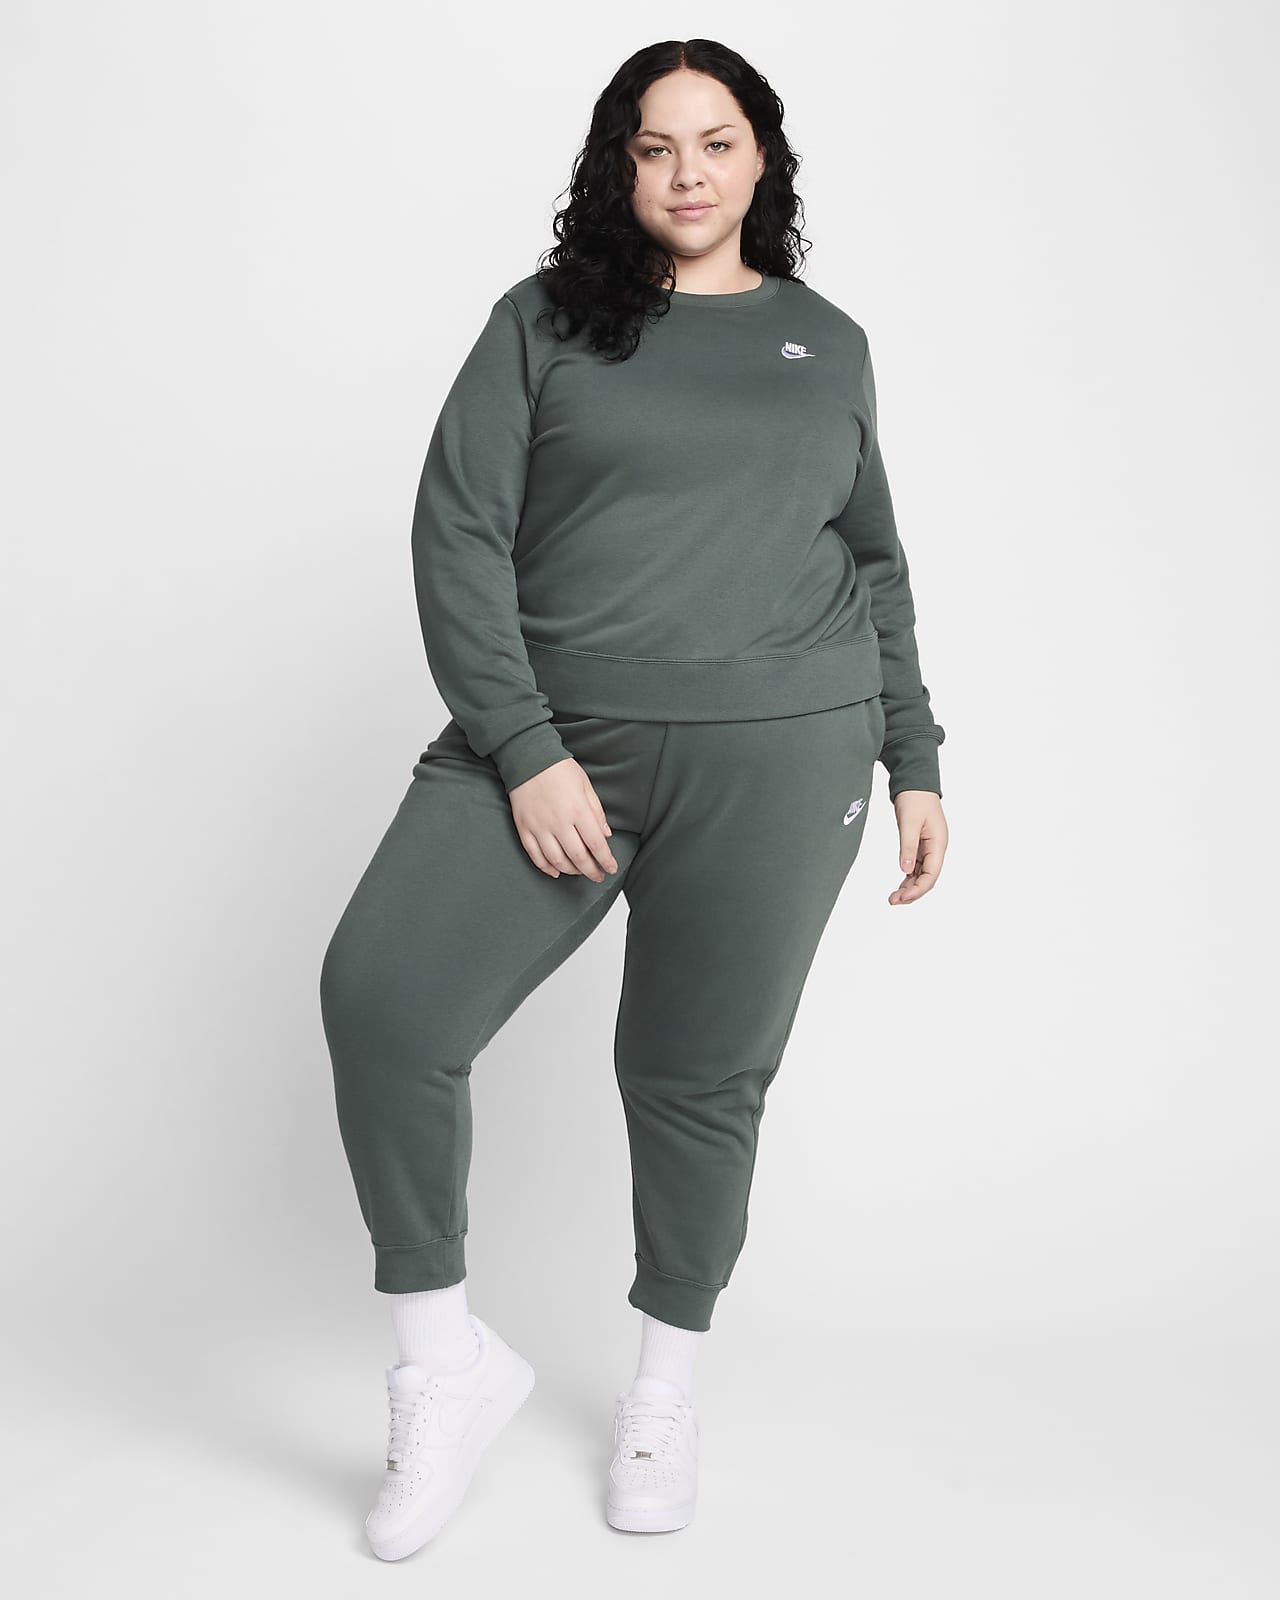 Nike Jordan Flight Fleece Women's Crewneck Sweatshirt (Plus Size). Nike.com